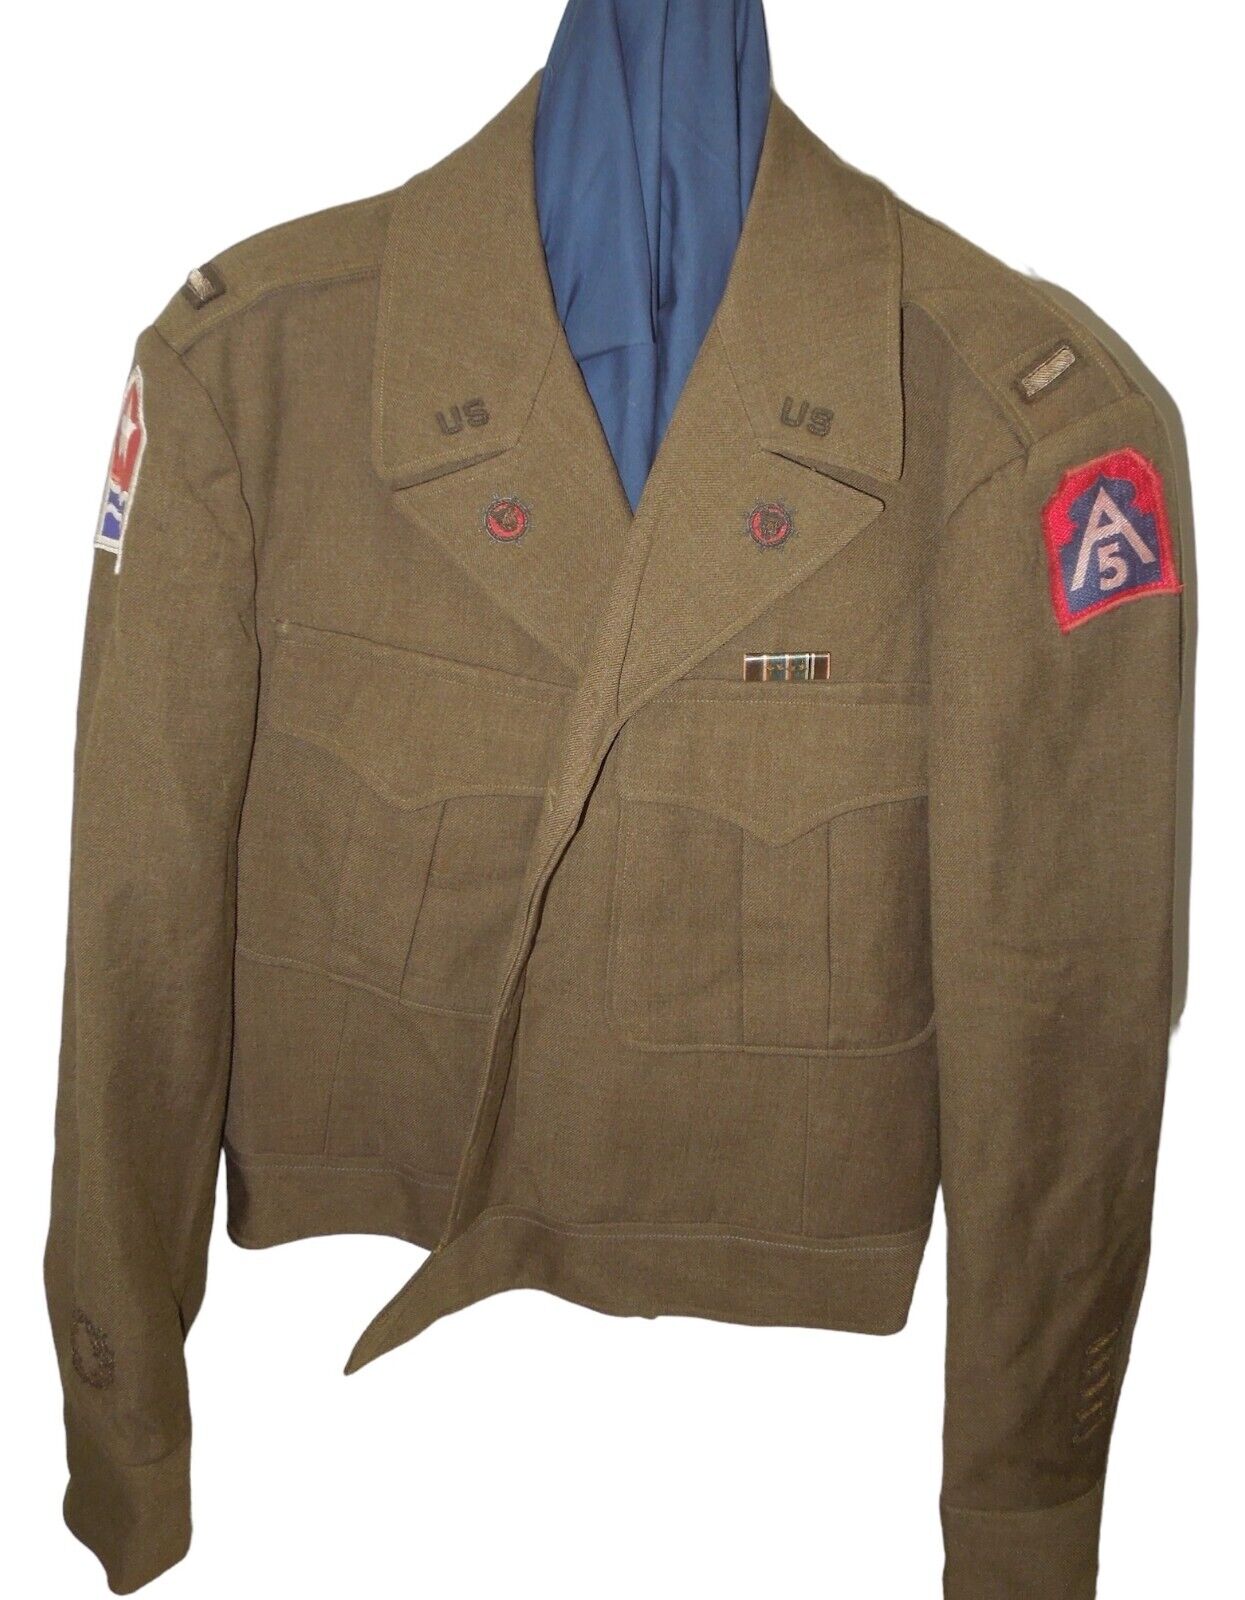 STUNNING WWII US Army Italian Made Patches Bullion Officer Ike Uniform Jacket 42